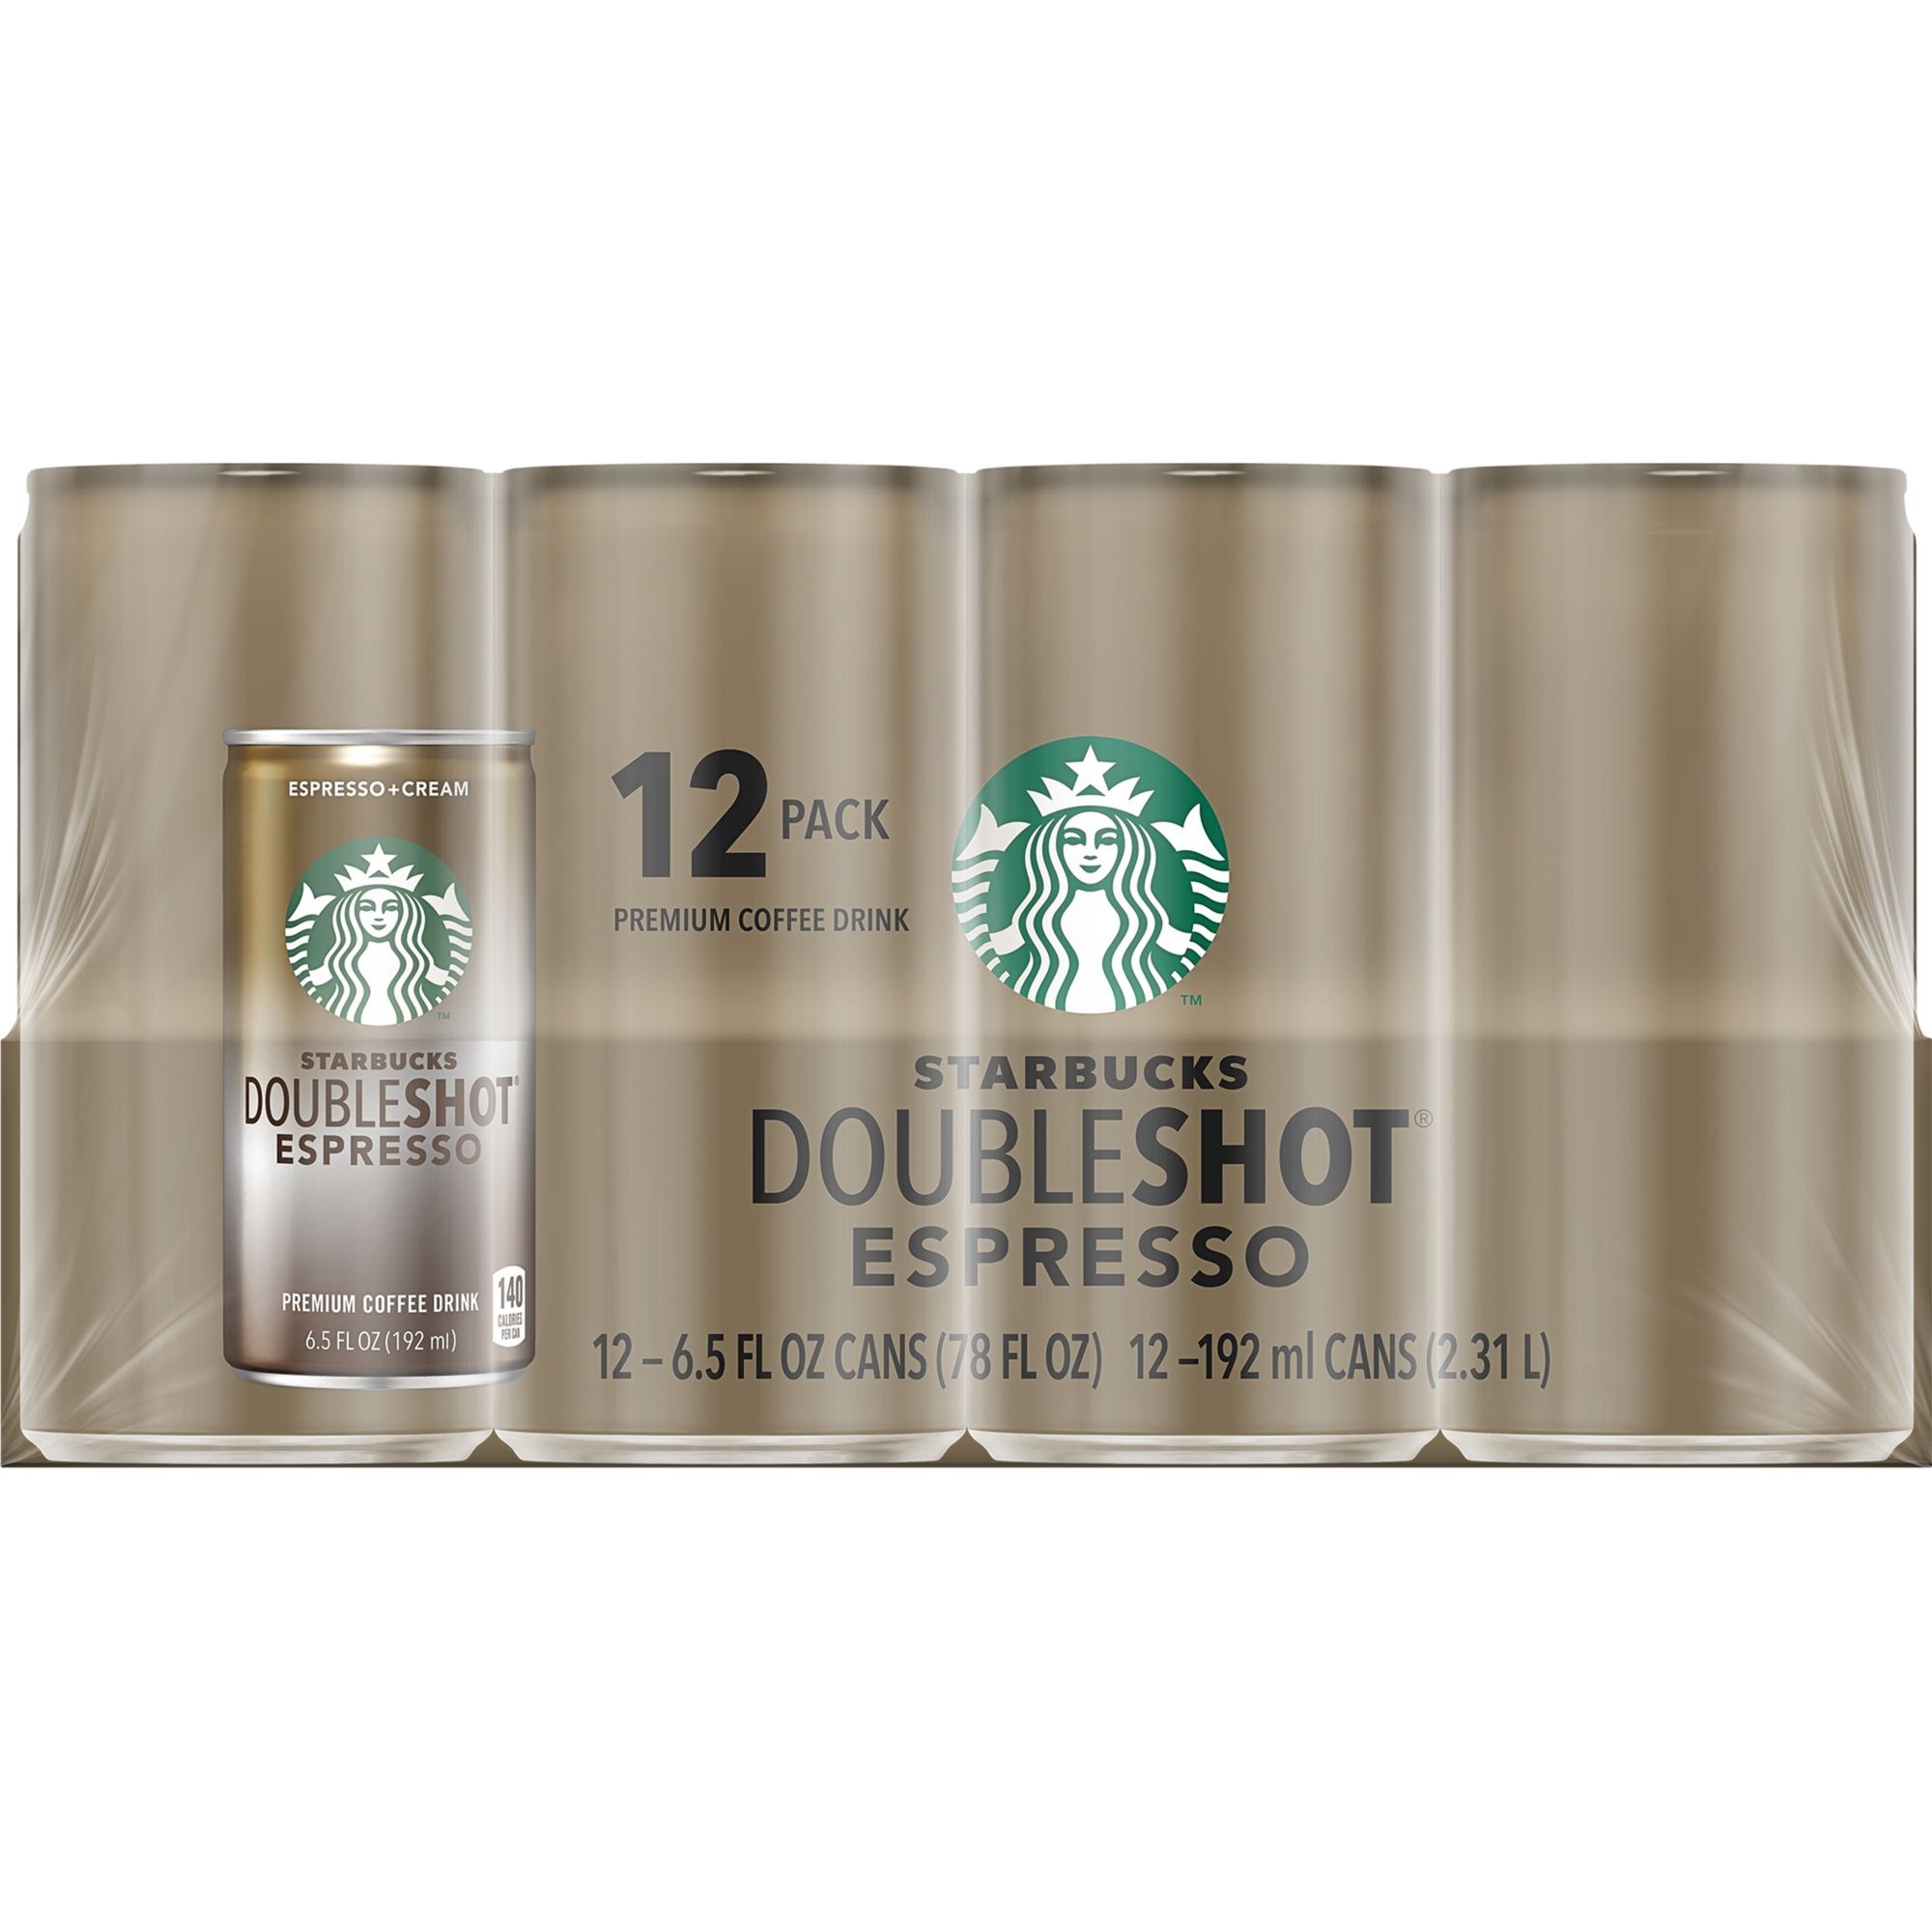 Starbucks Doubleshot Espresso Espresso Beverage, Premium, Espresso & Cream - 12 pack, 6.5 fl oz cans